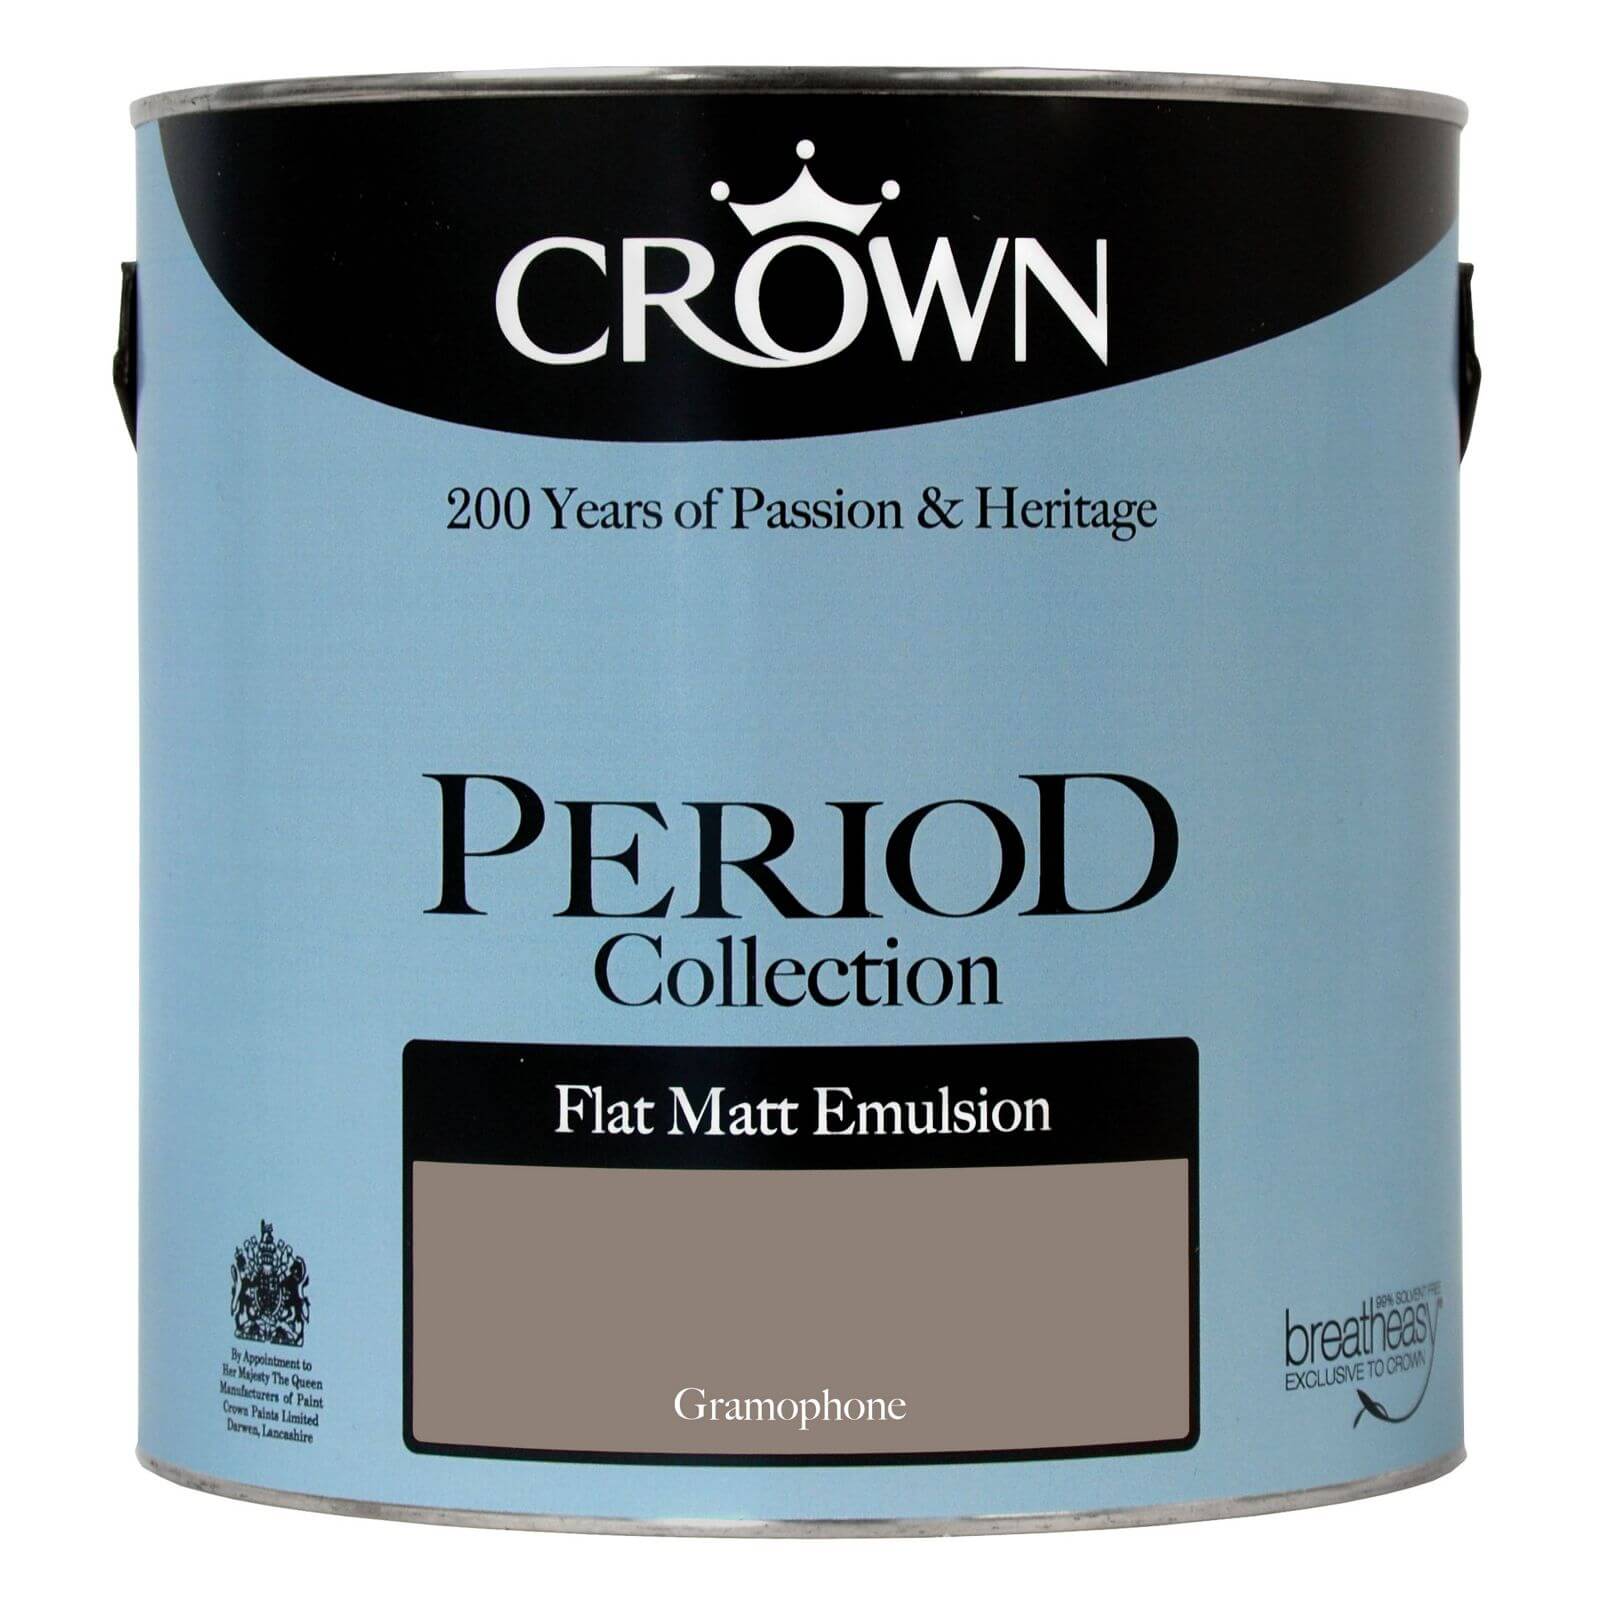 Crown Period Collection Gramophone - Flat Matt Emulsion Paint - 40ml